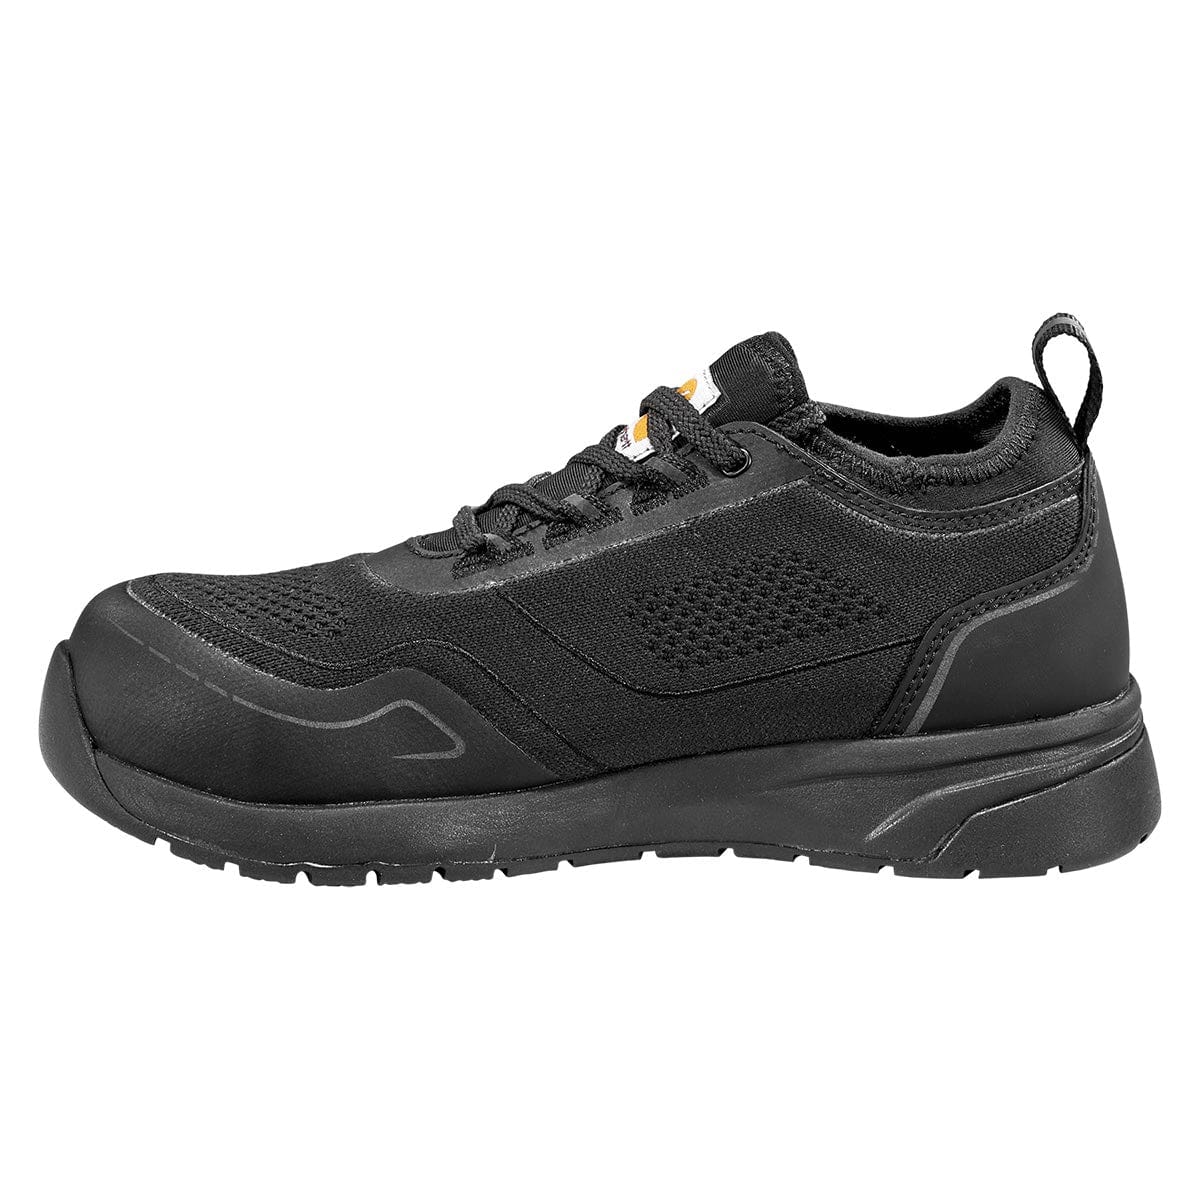 Carhartt Women's Force 3-inch Nano Composite Toe Work Shoes-Black